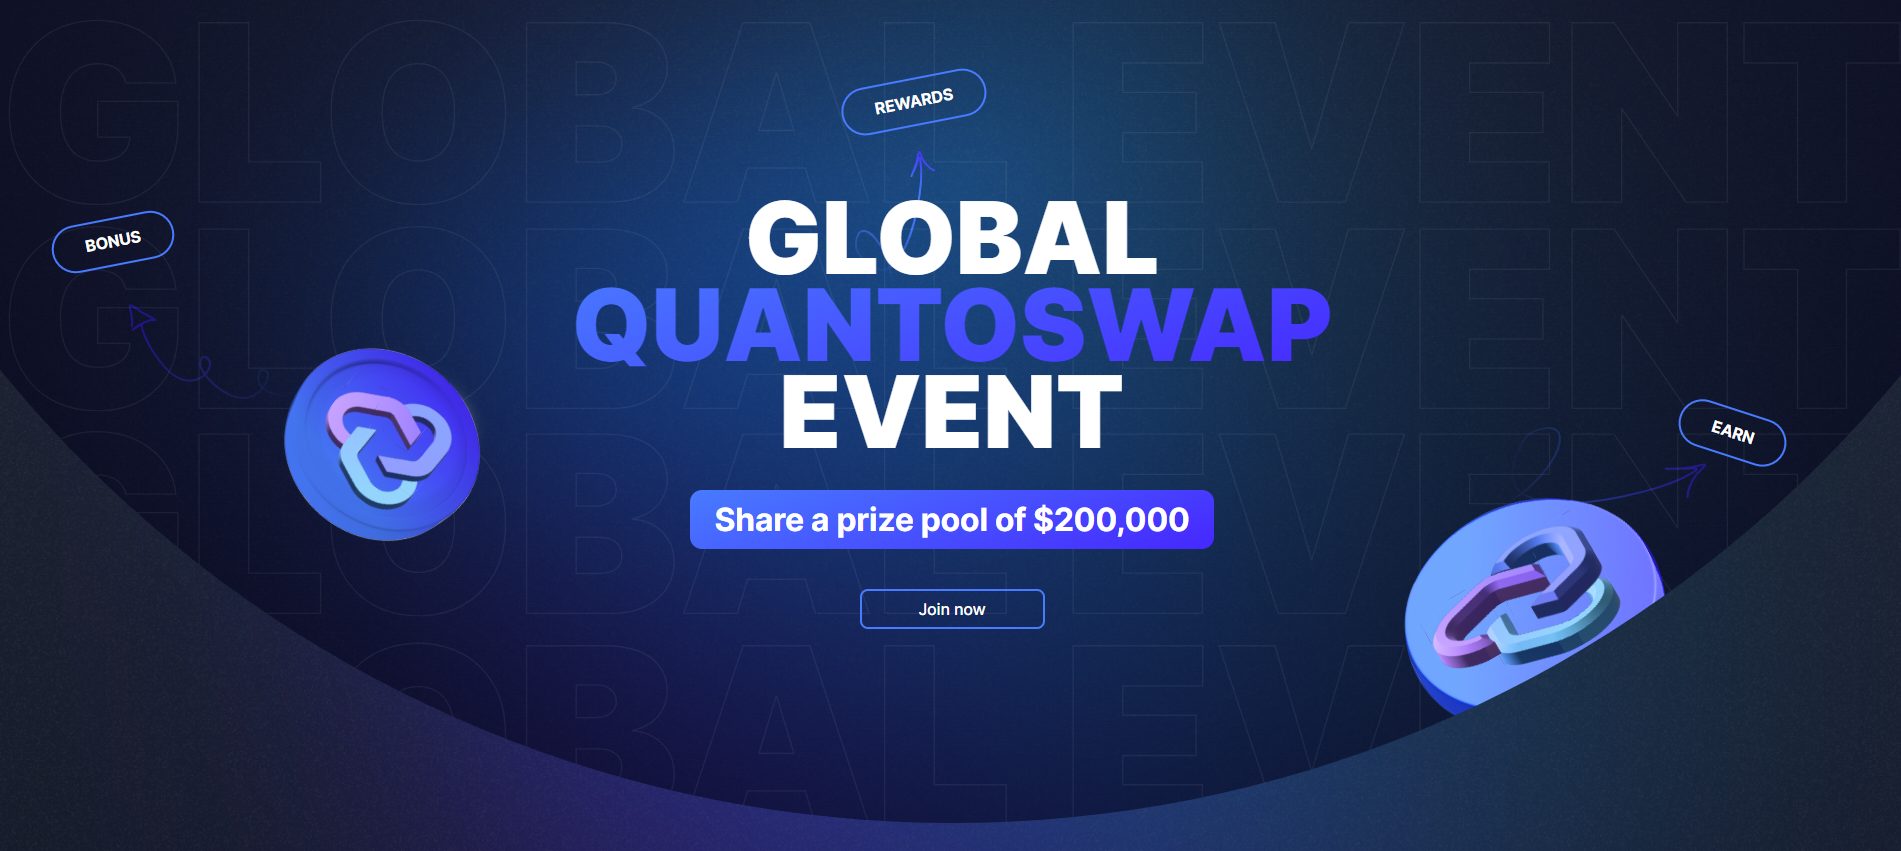 QuantoSwap 소개: 다양한 수익원을 갖춘 획기적인 이더리움 기반 DEX